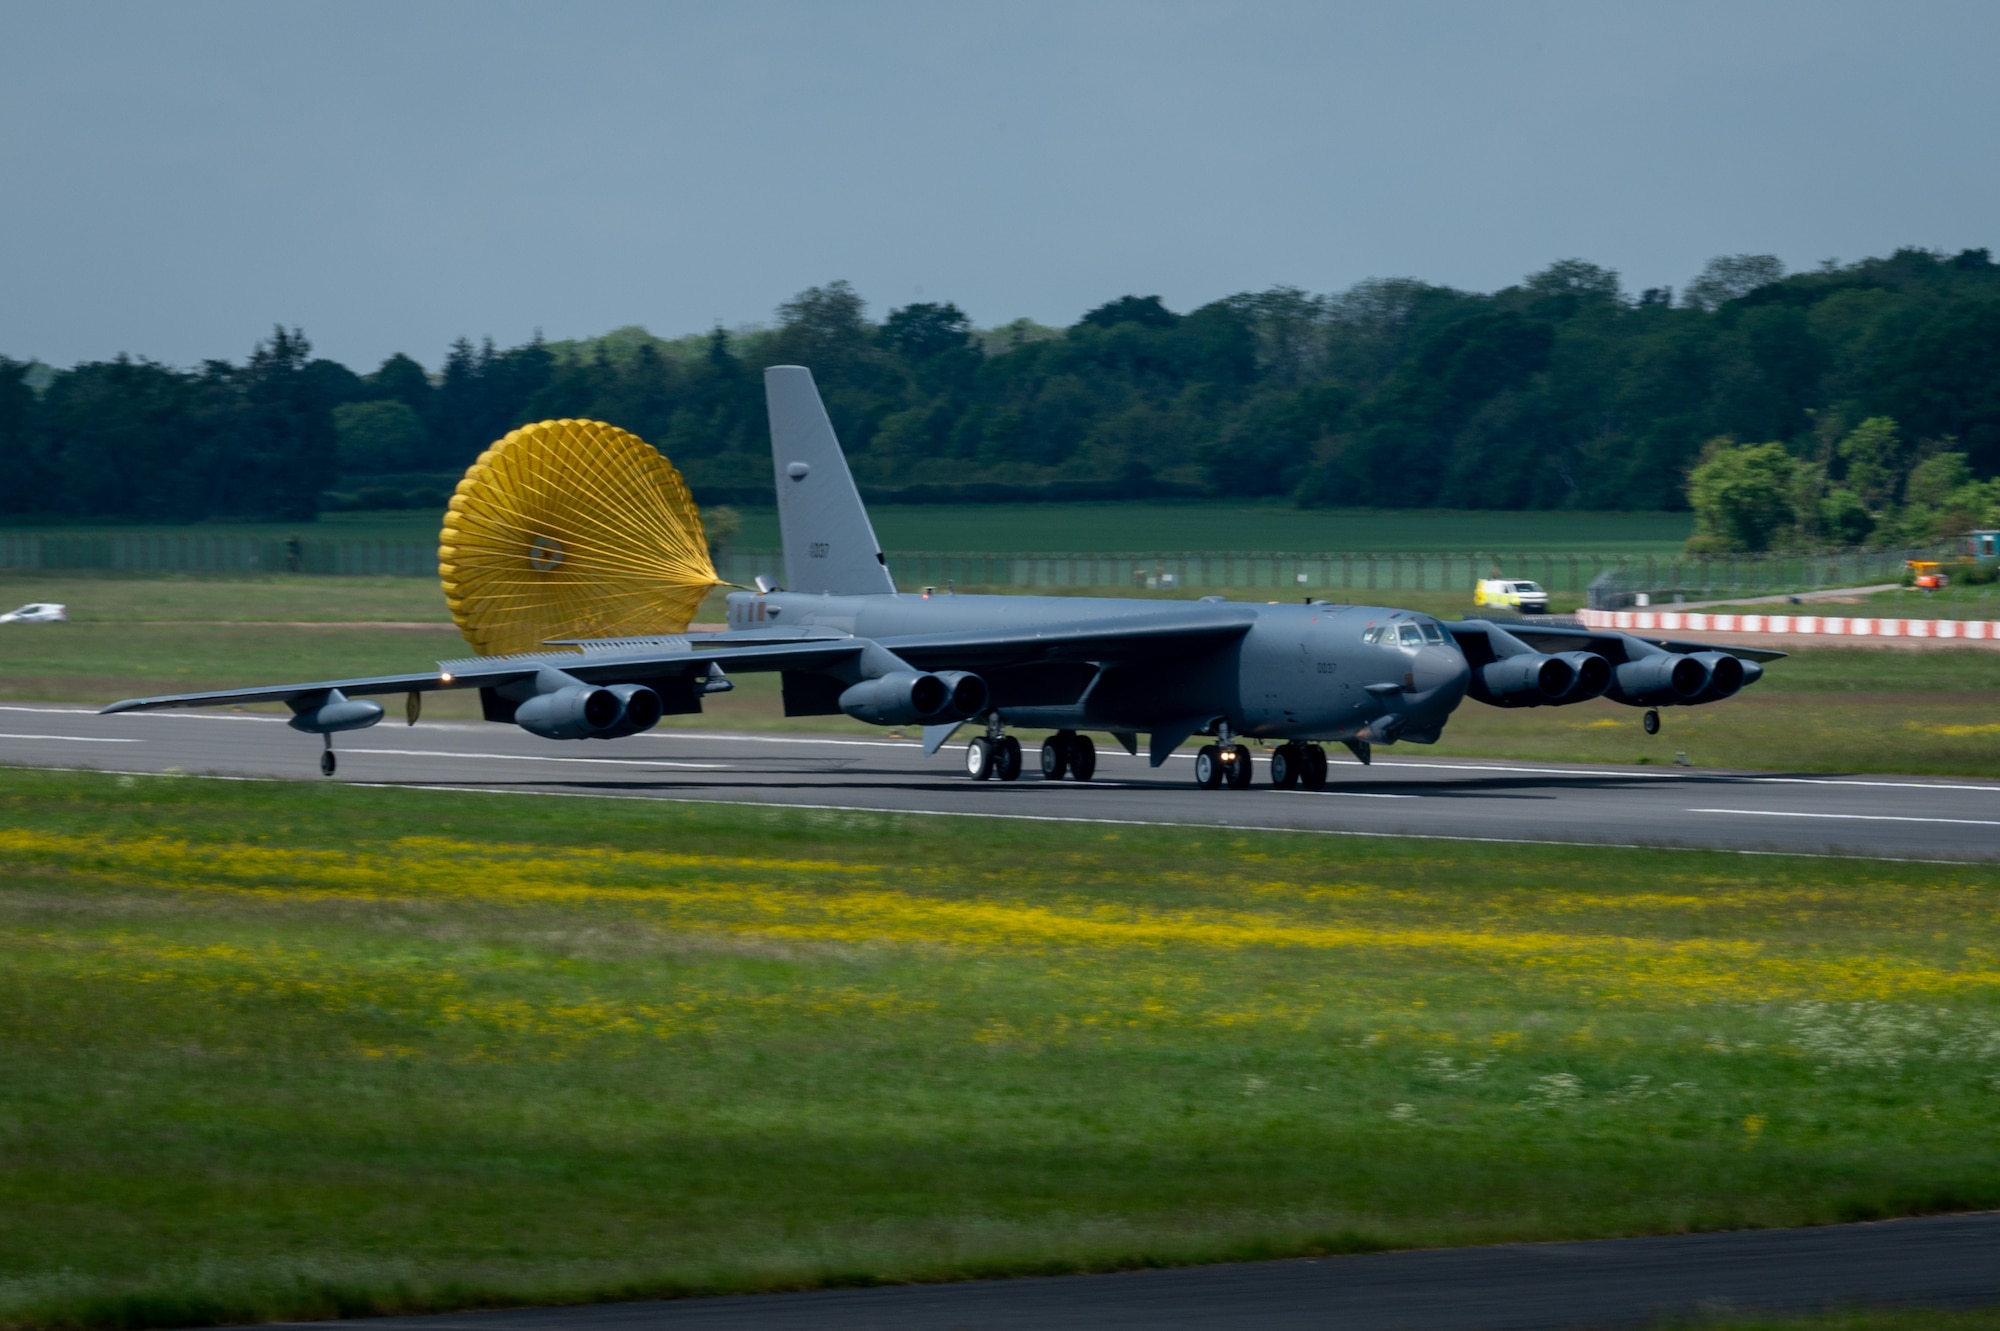 Bomber aircraft lands on runway.